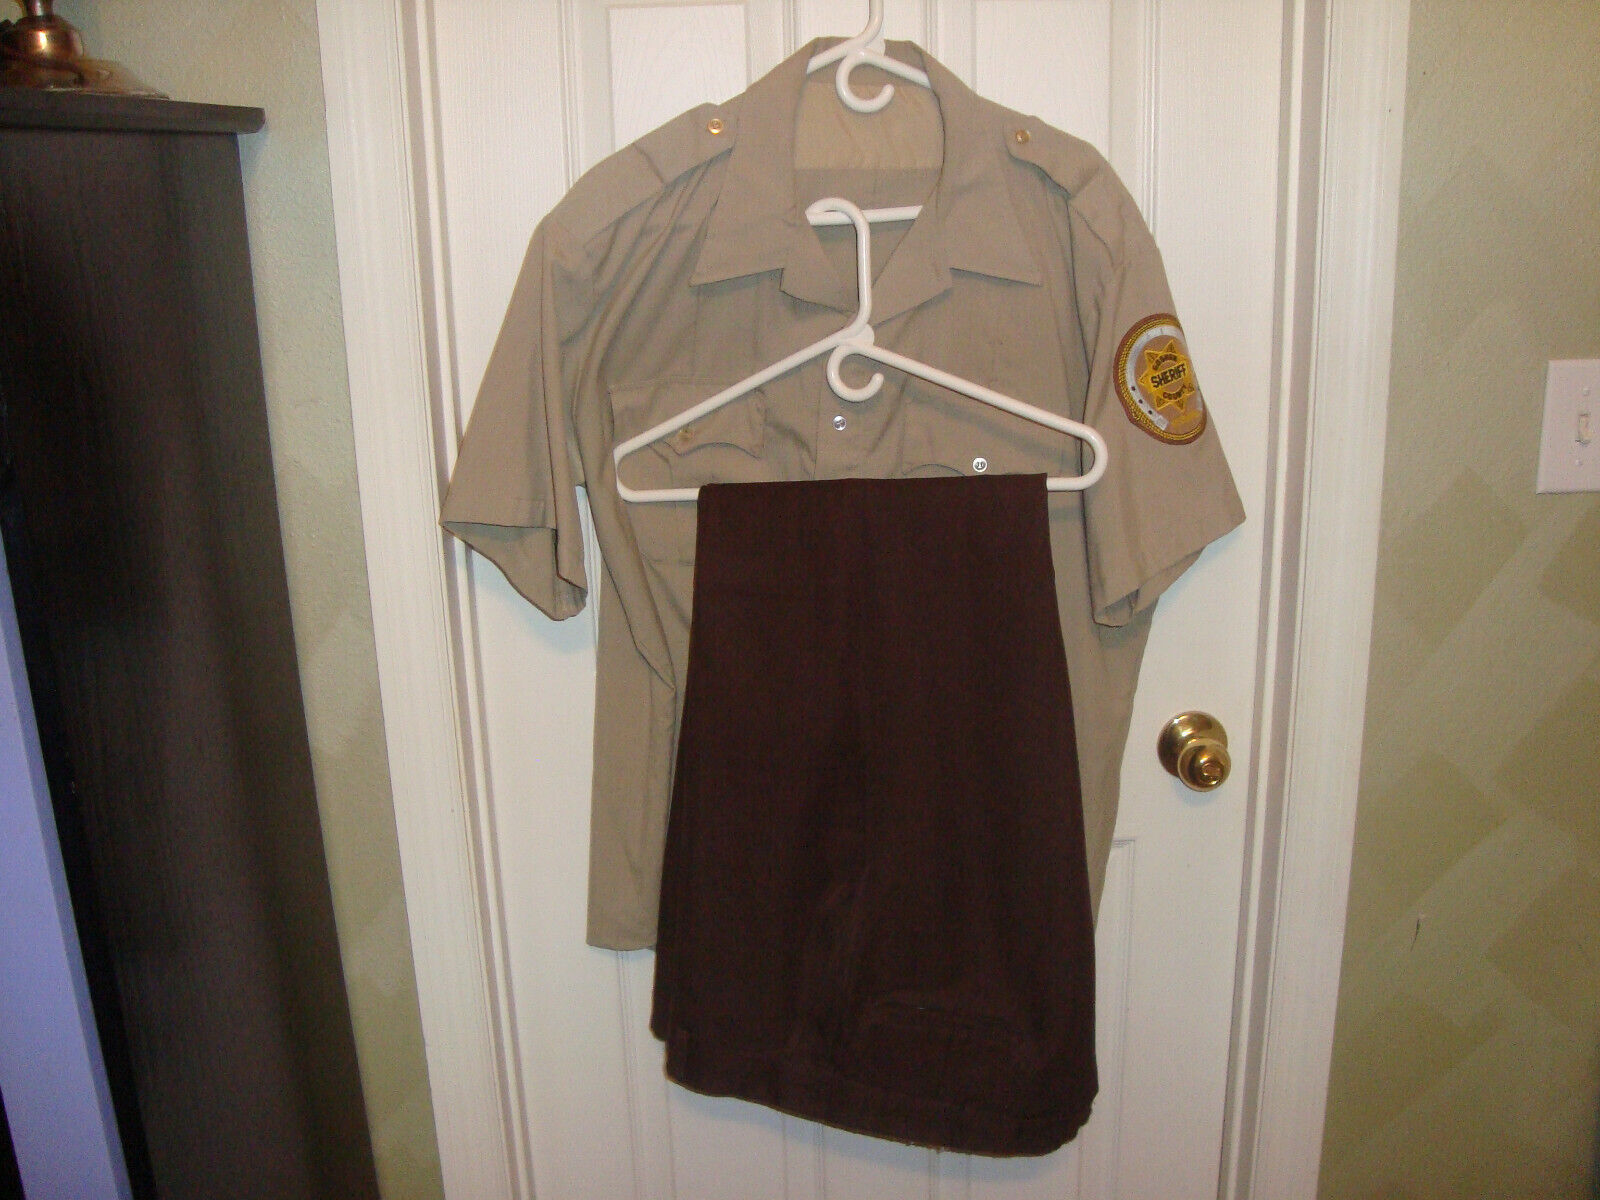 Retired Vtg Goshen County Wyoming Sheriff Department Police uniform Shirt Pant